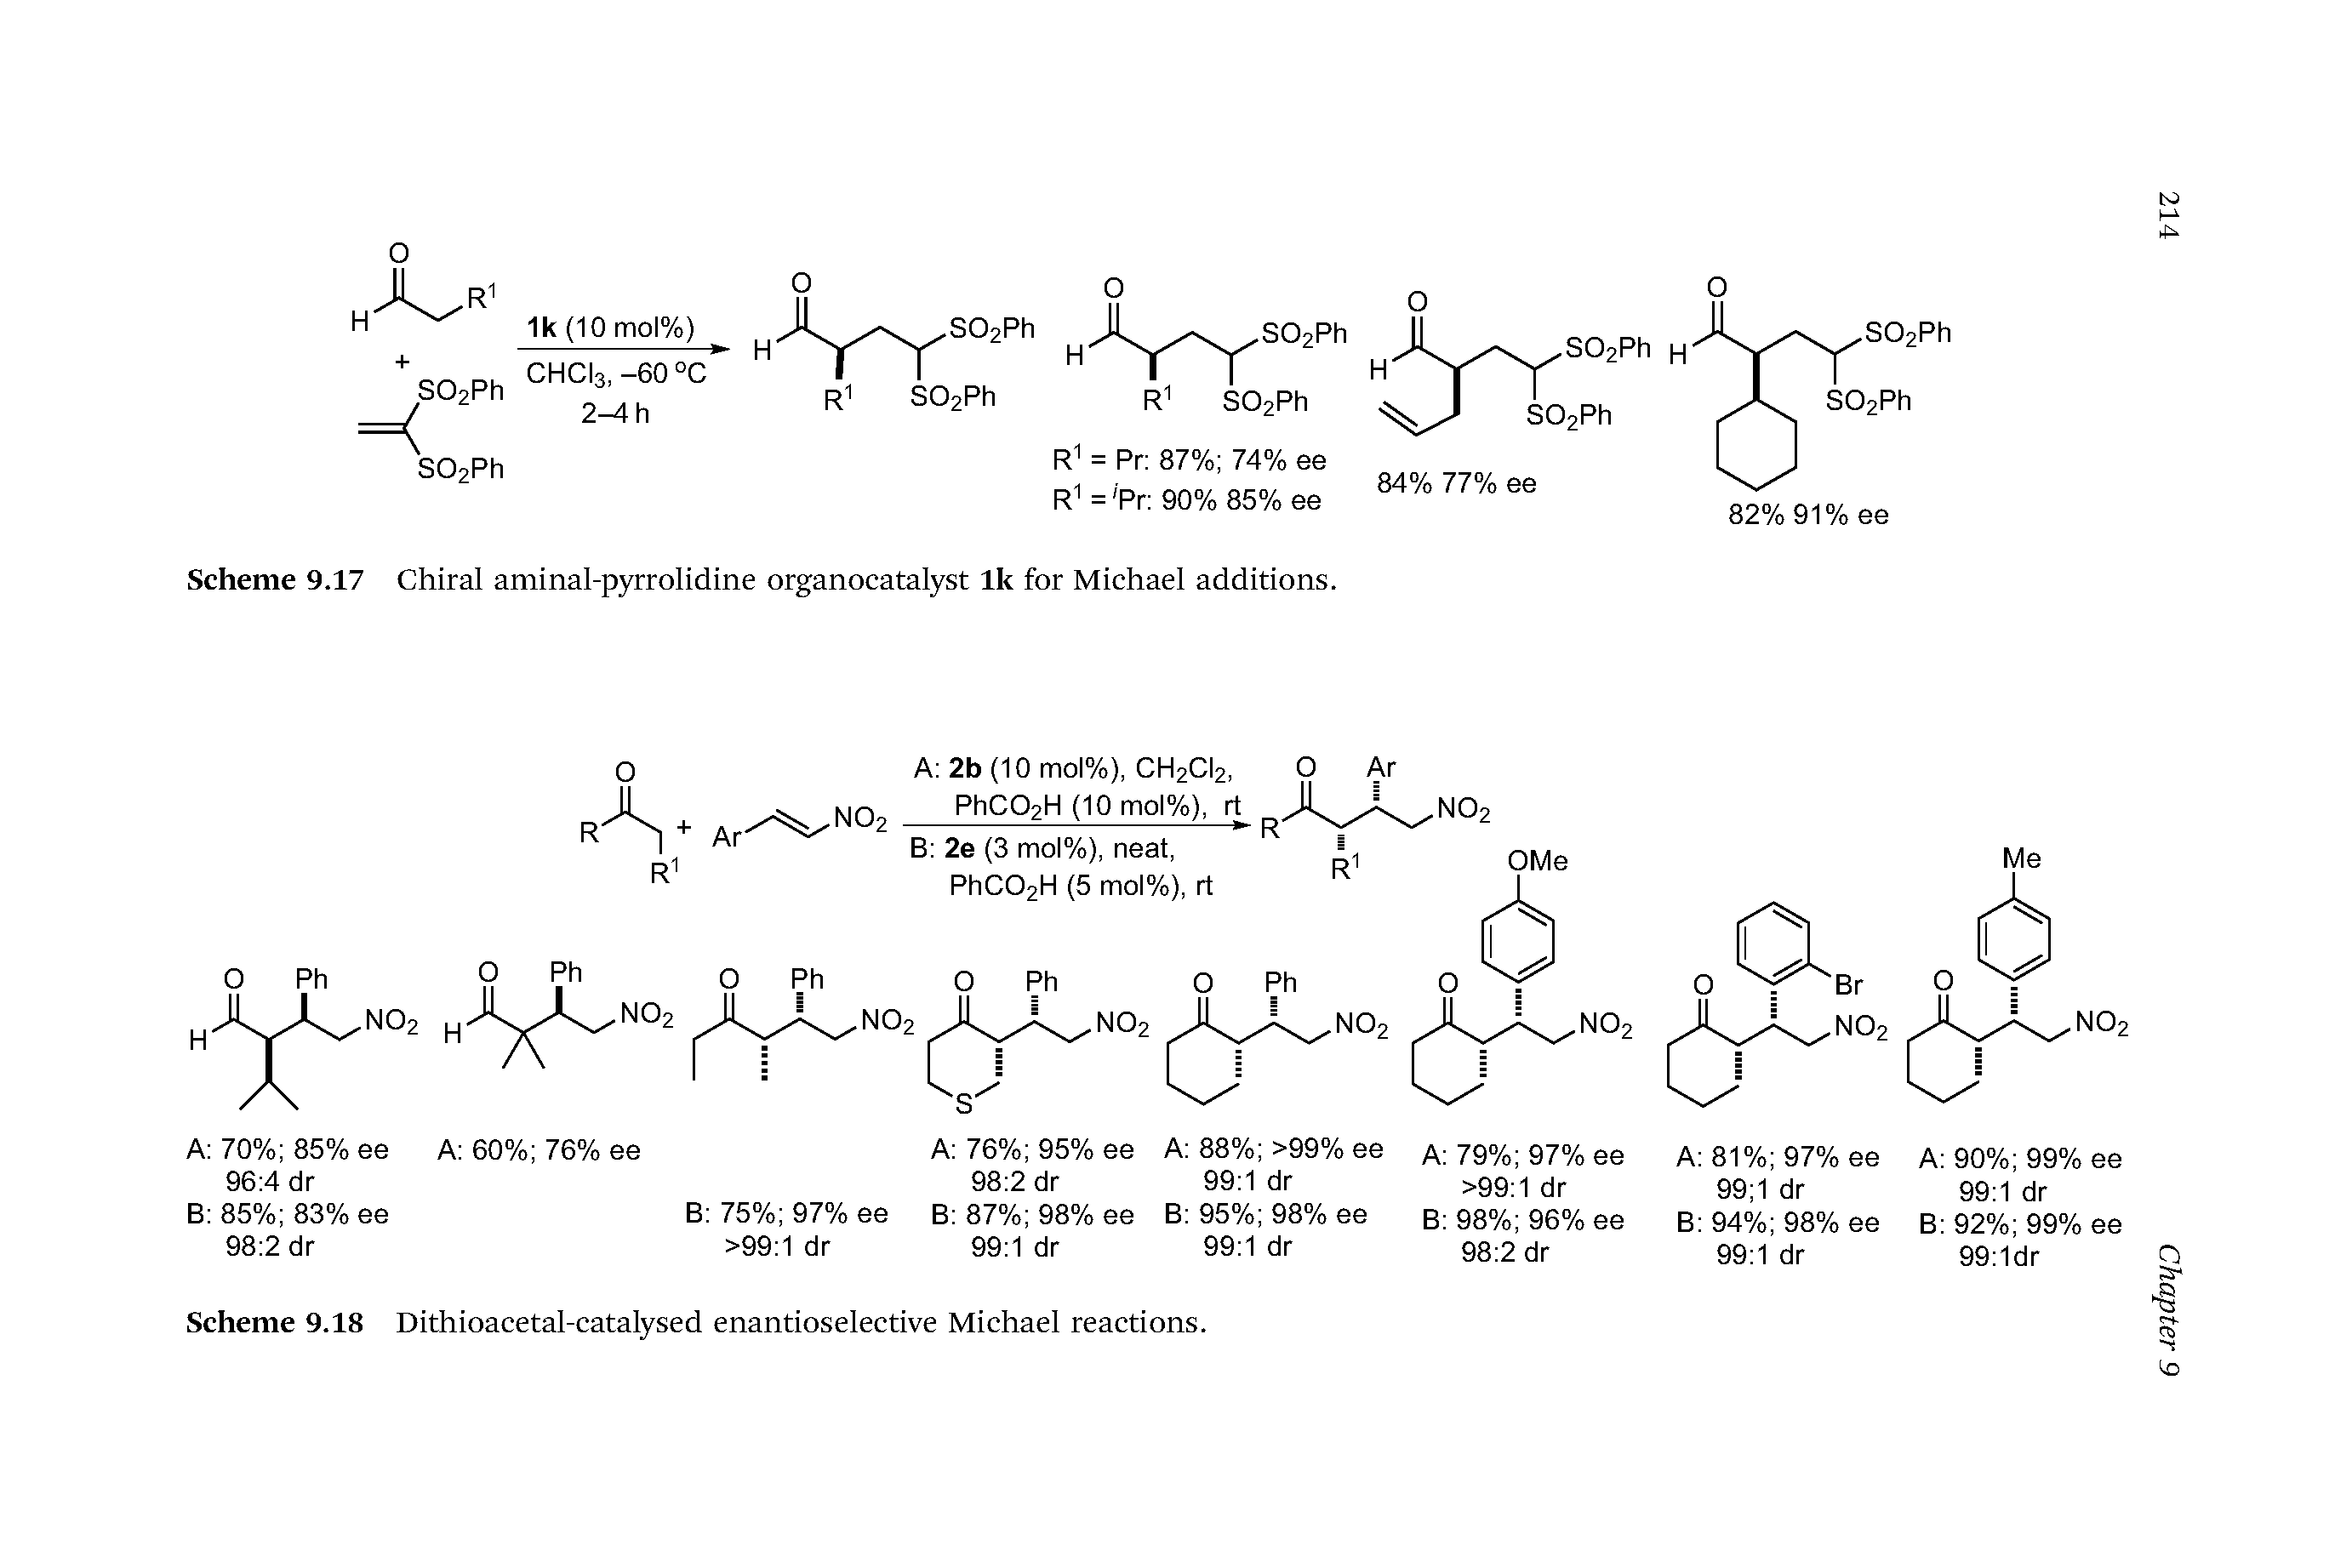 Scheme 9.17 Chiral aminal-pyrrolidine organocatalyst Ik for Michael additions.